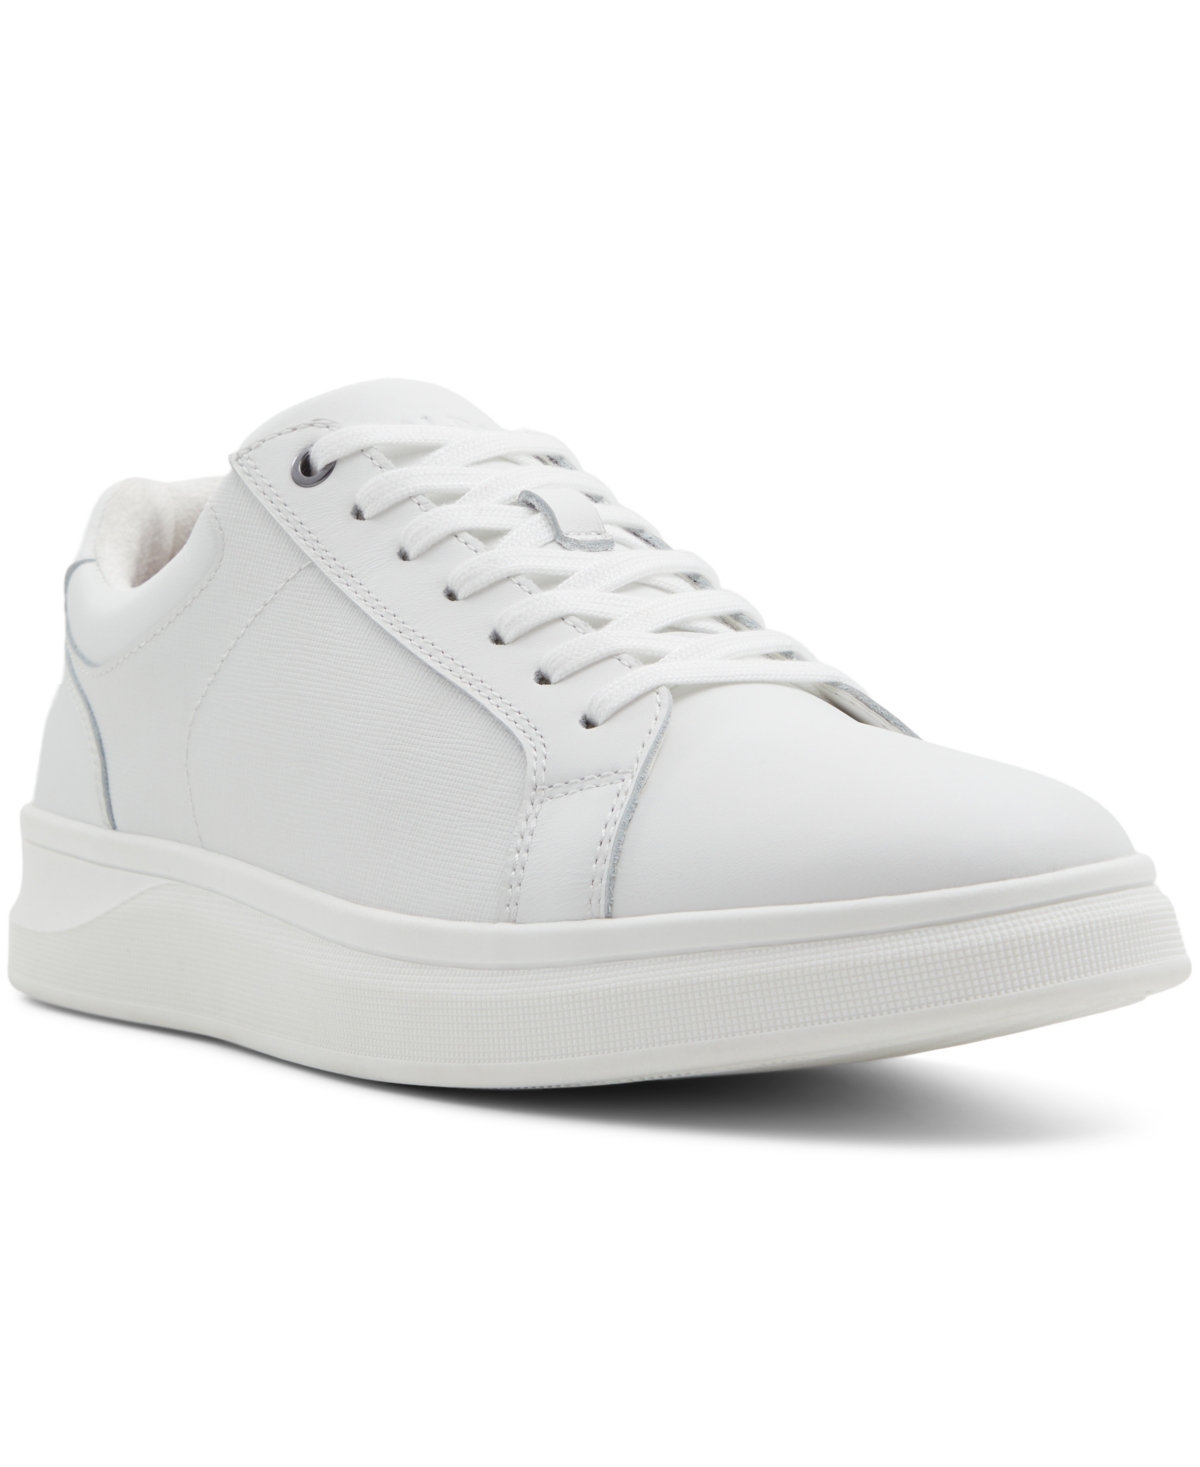 Men's Darren Casual Lace Up Shoes - White